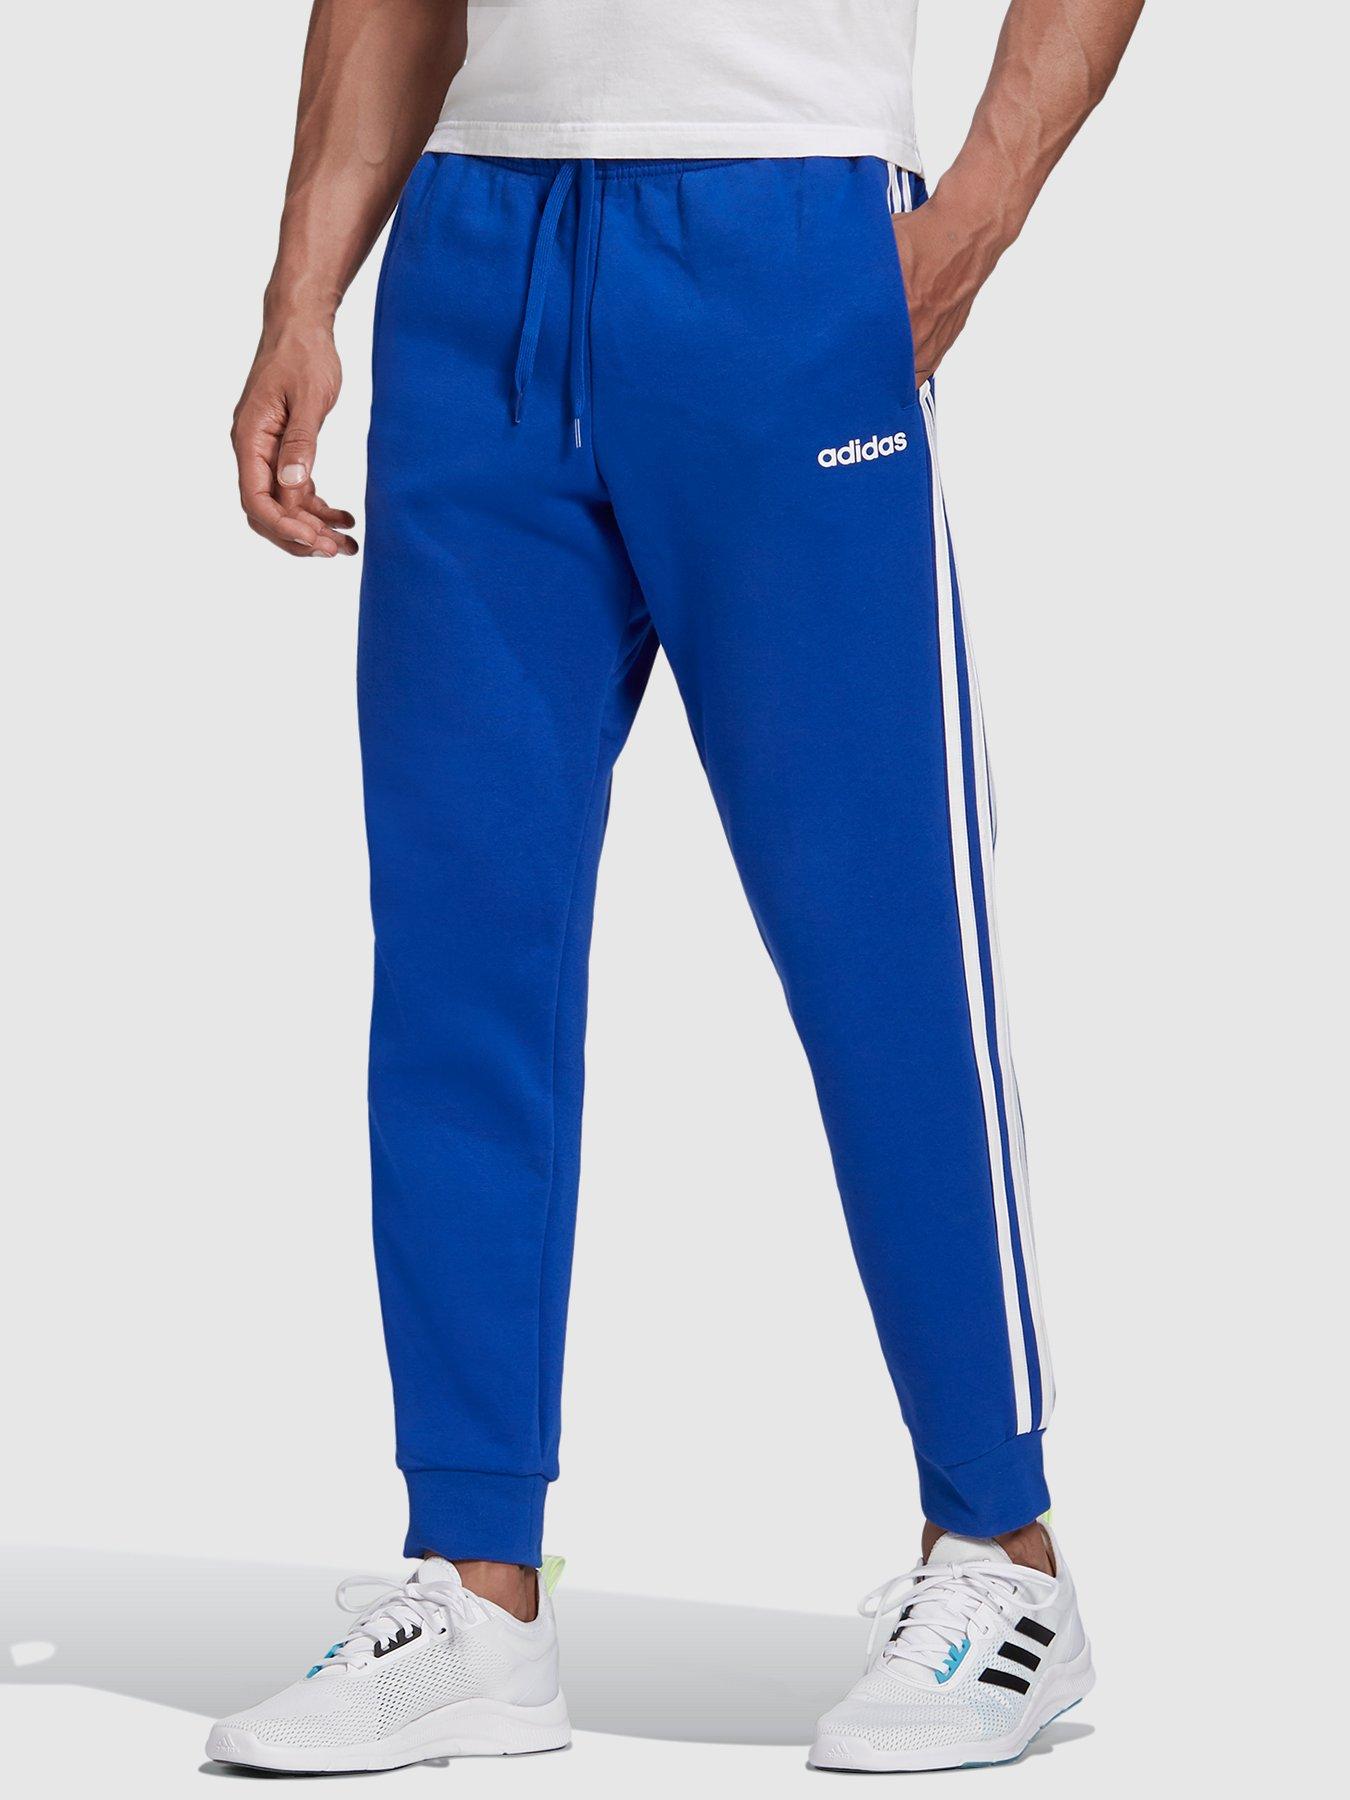 adidas essential track pants blue